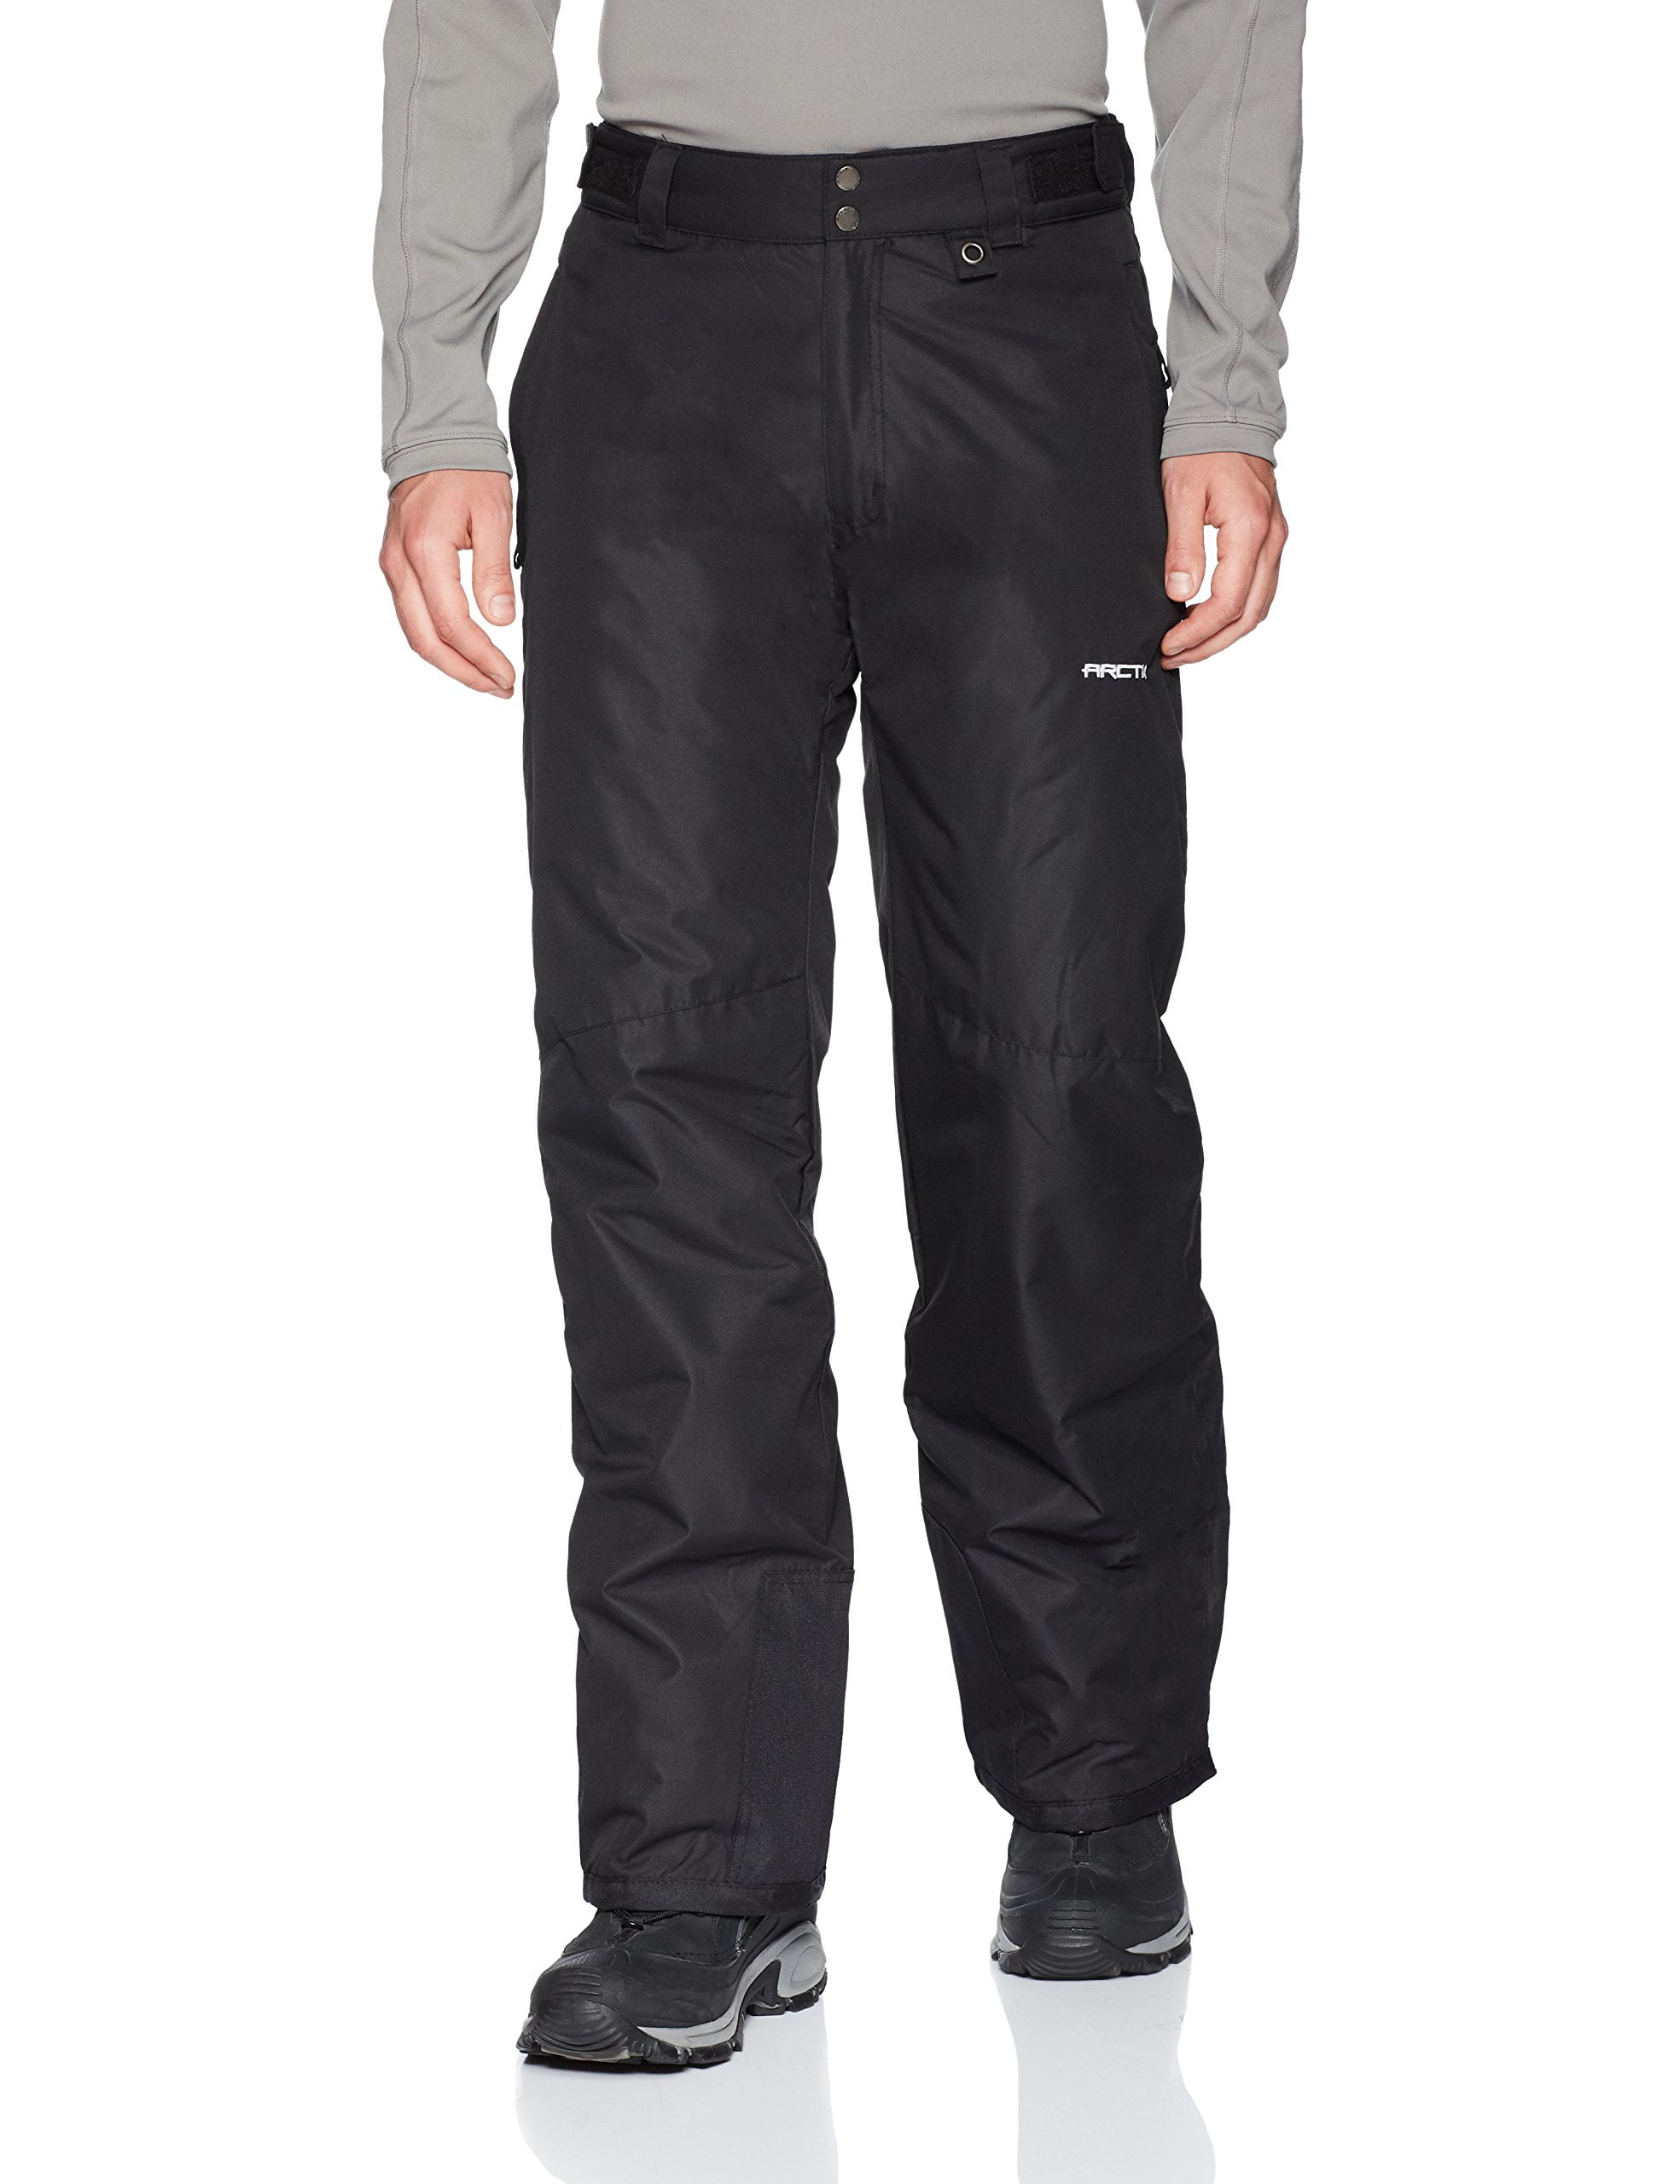 Arctix Men's Insulated Cargo Snowsports Snow Pants Black Large 